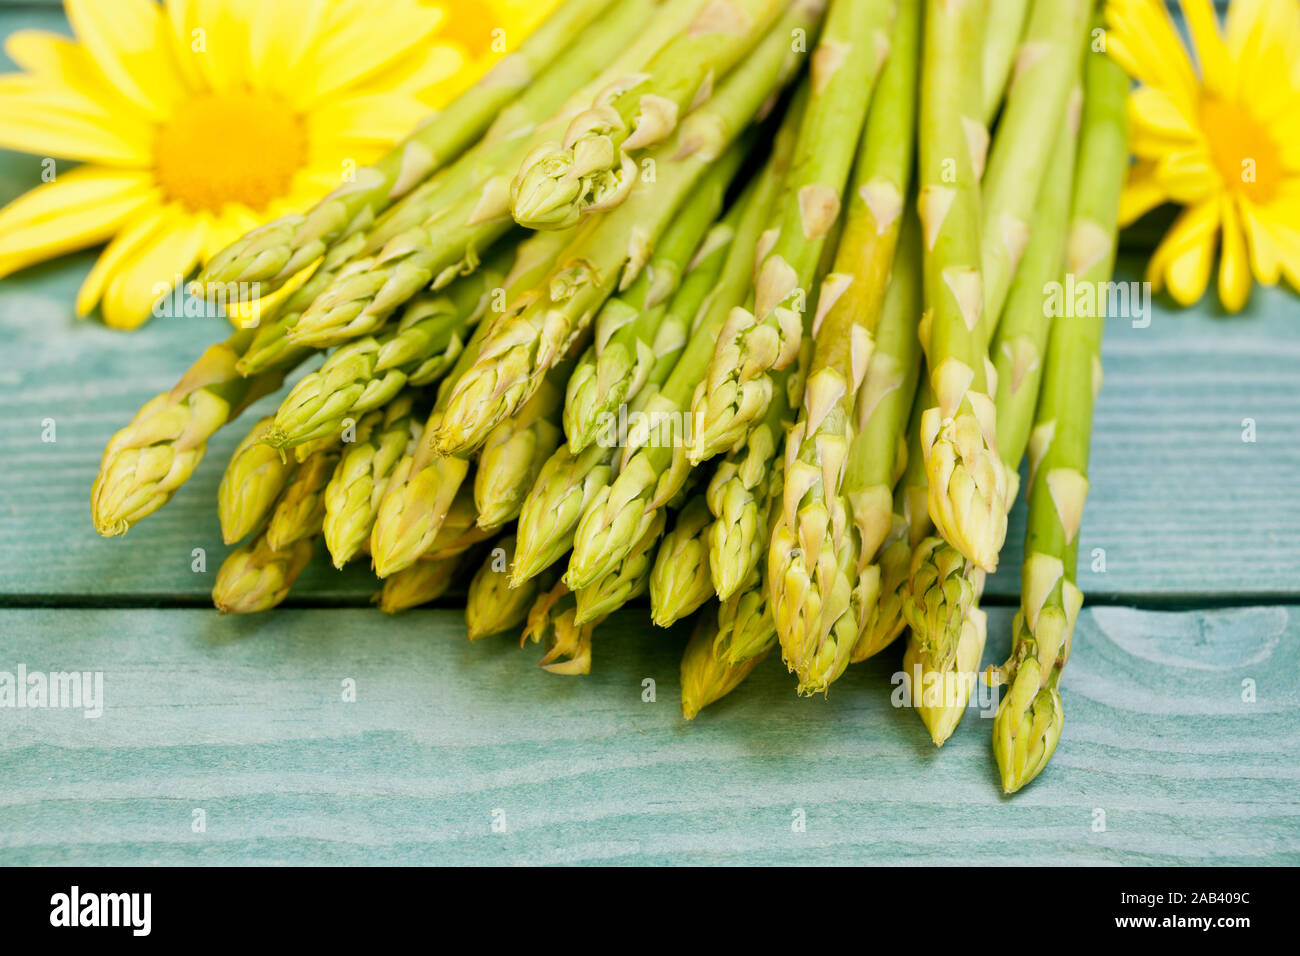 Grüner Spargel und ein paar gelbe Blüten |asperges vertes et quelques fleurs jaunes| Banque D'Images